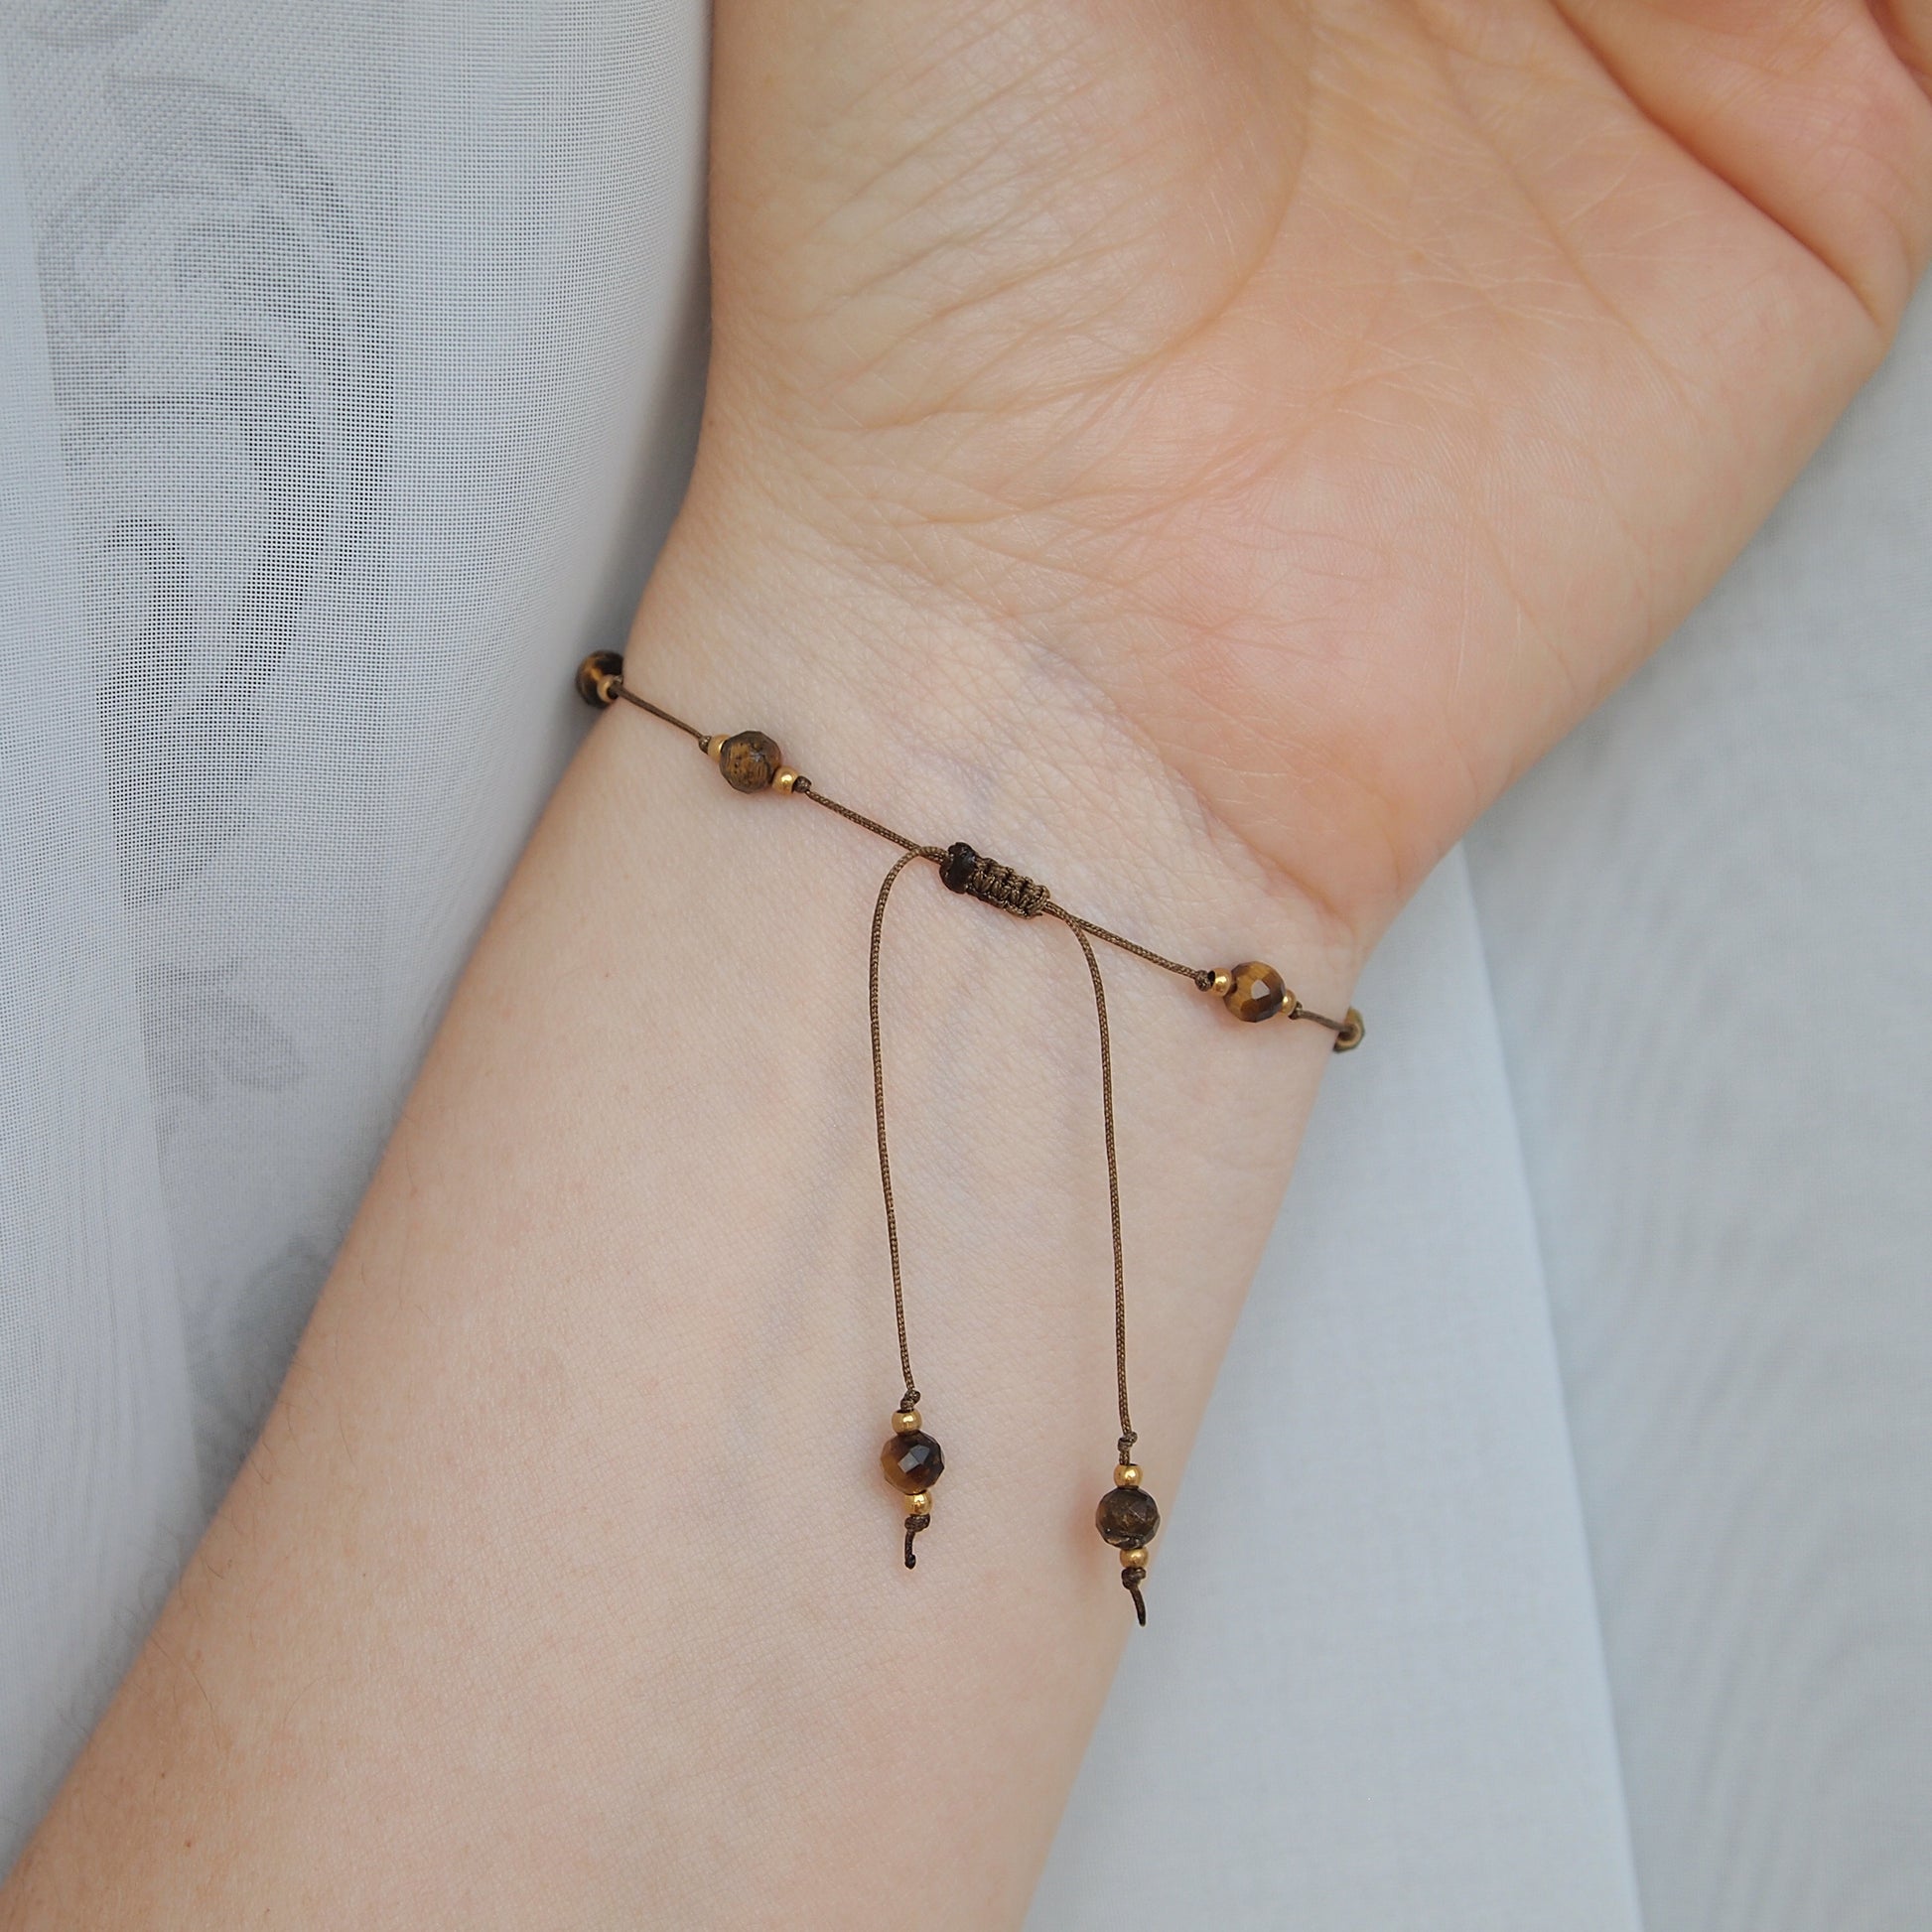 adjustable cord bracelet with gemstones